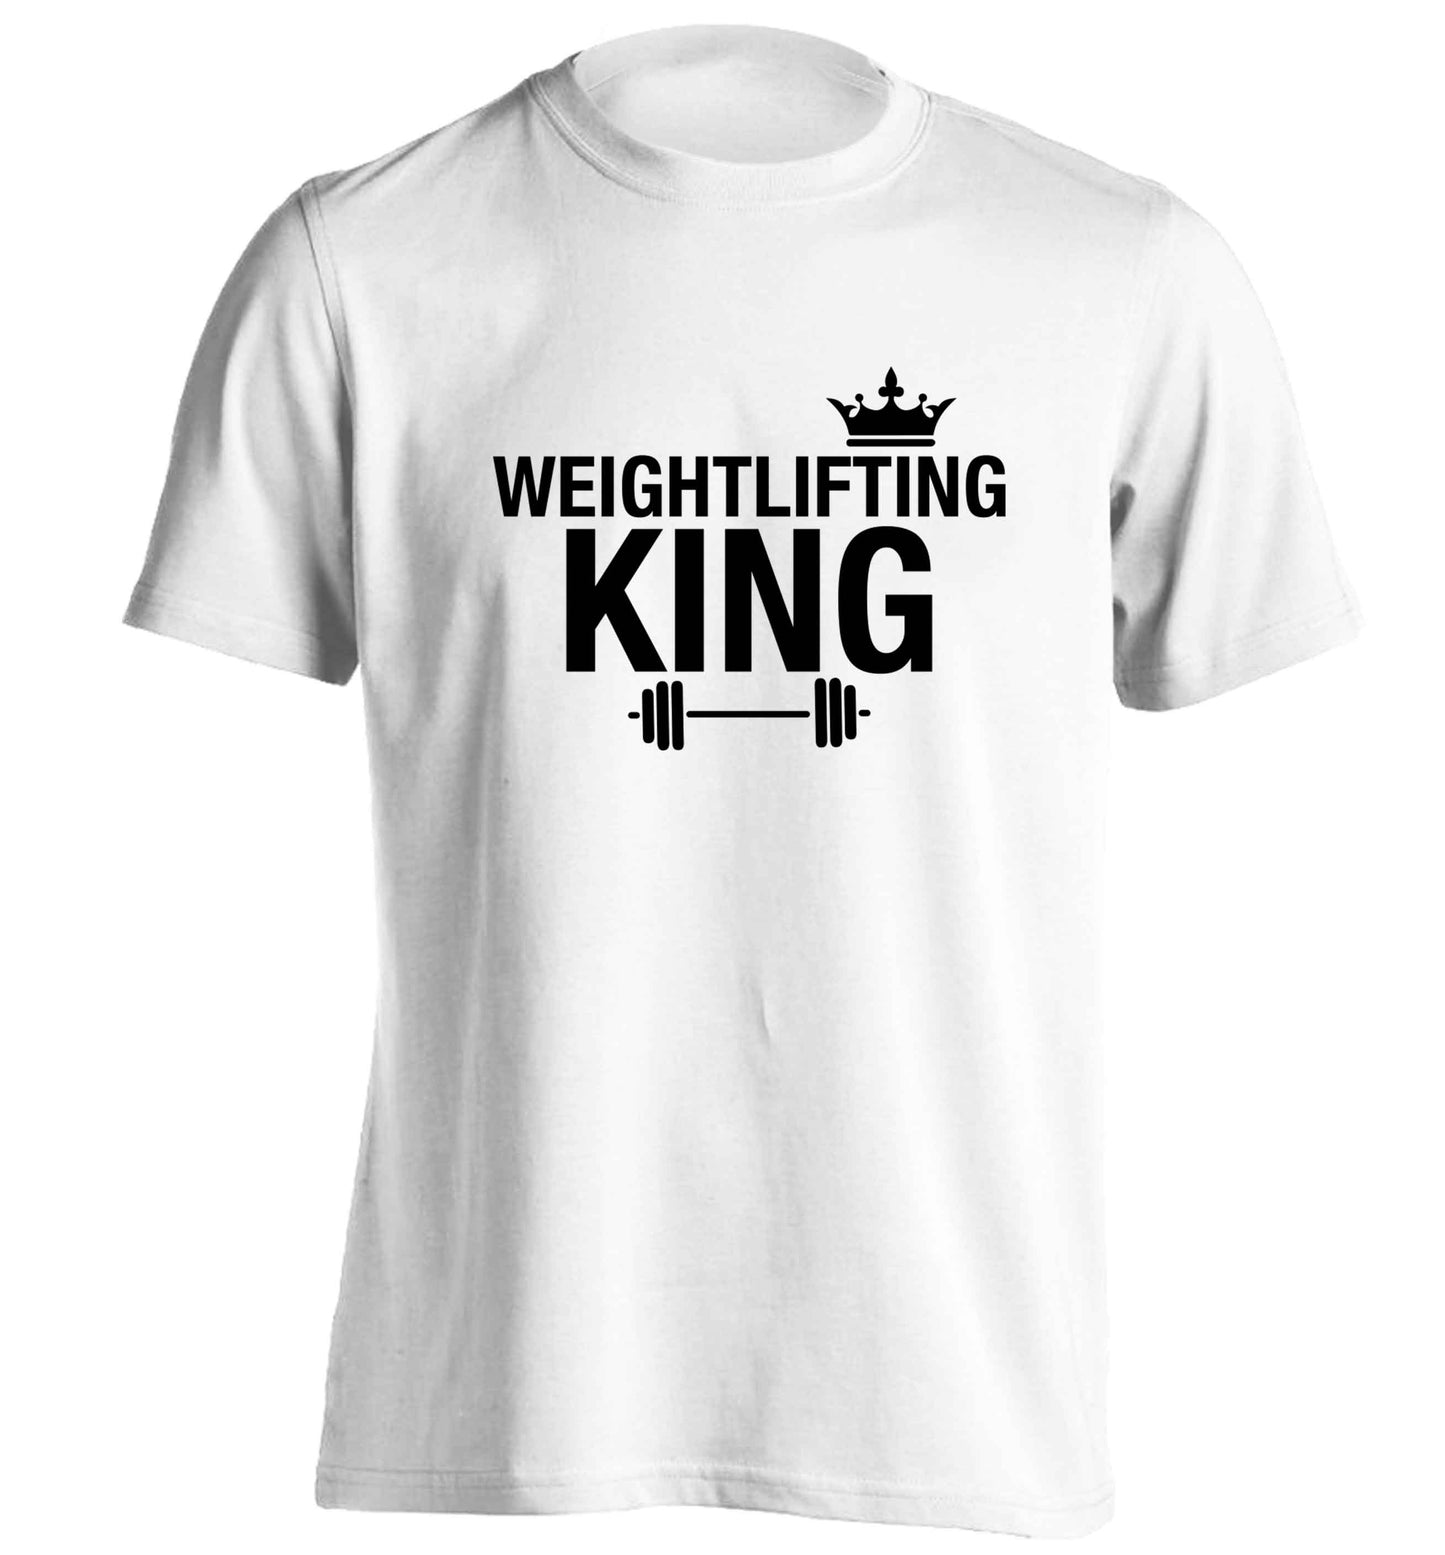 Weightlifting king adults unisex white Tshirt 2XL